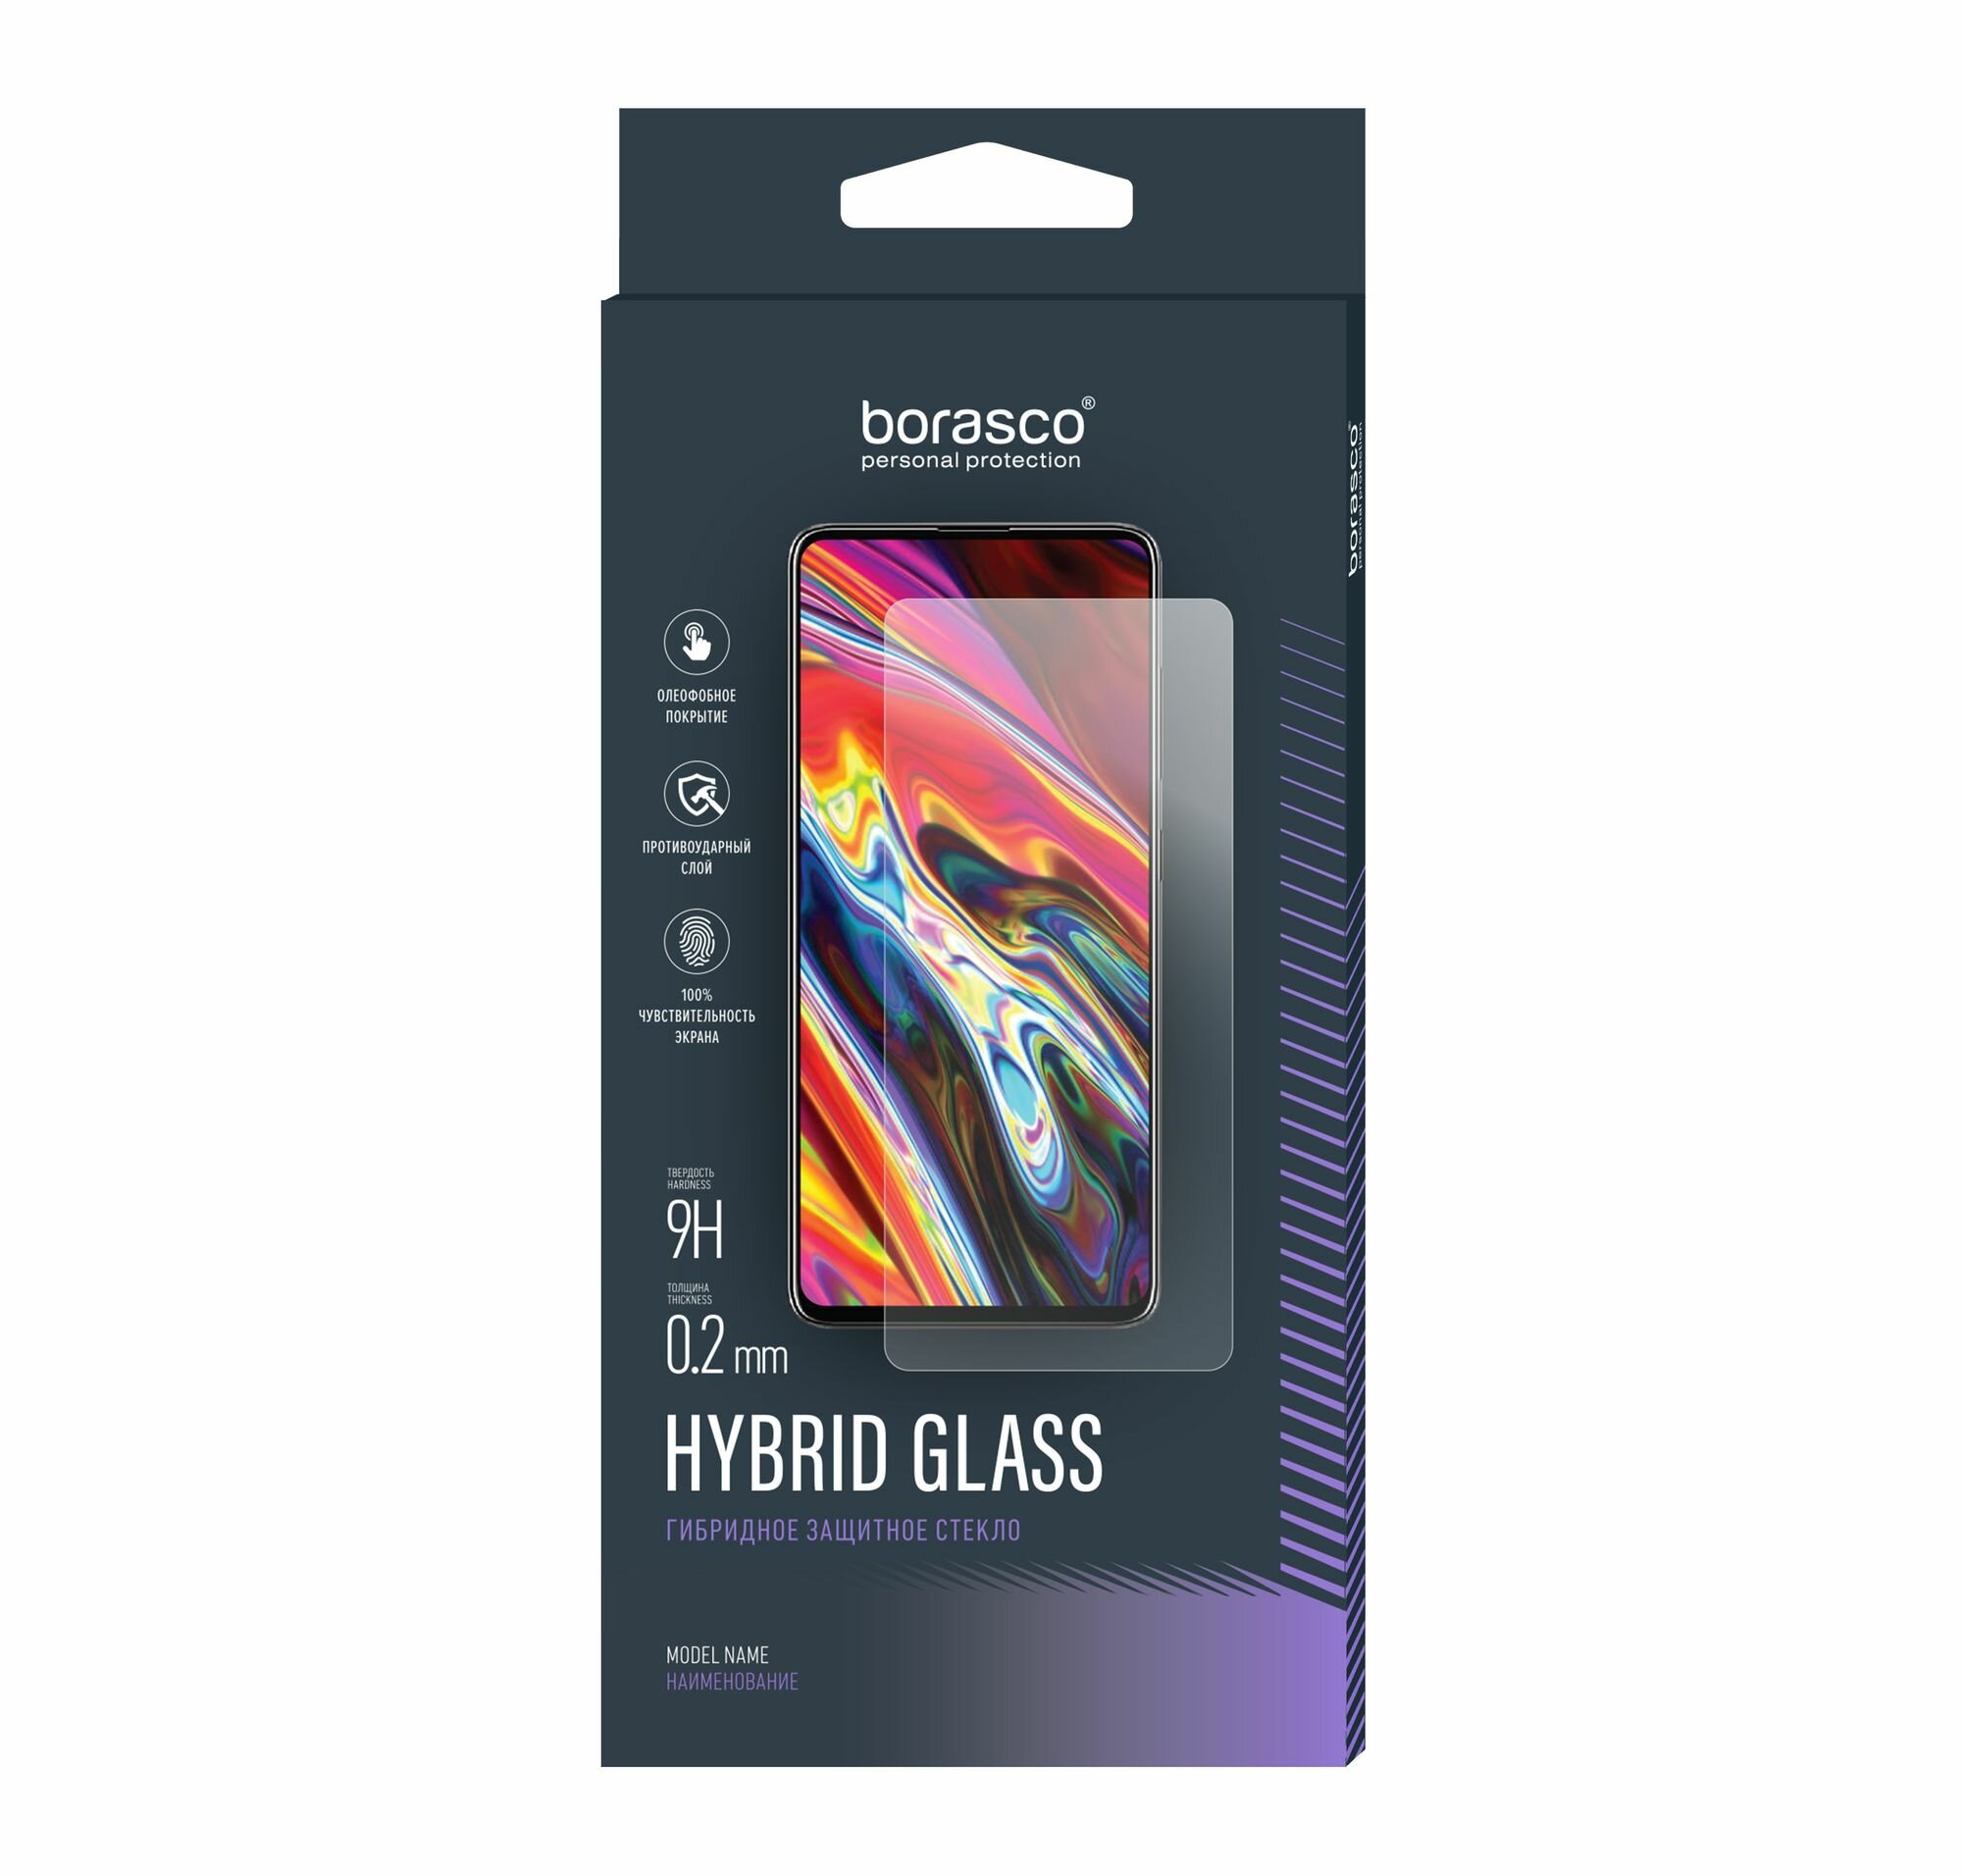 Стекло защитное Hybrid Glass VSP 026 мм для Huawei MediaPad T2 7.0